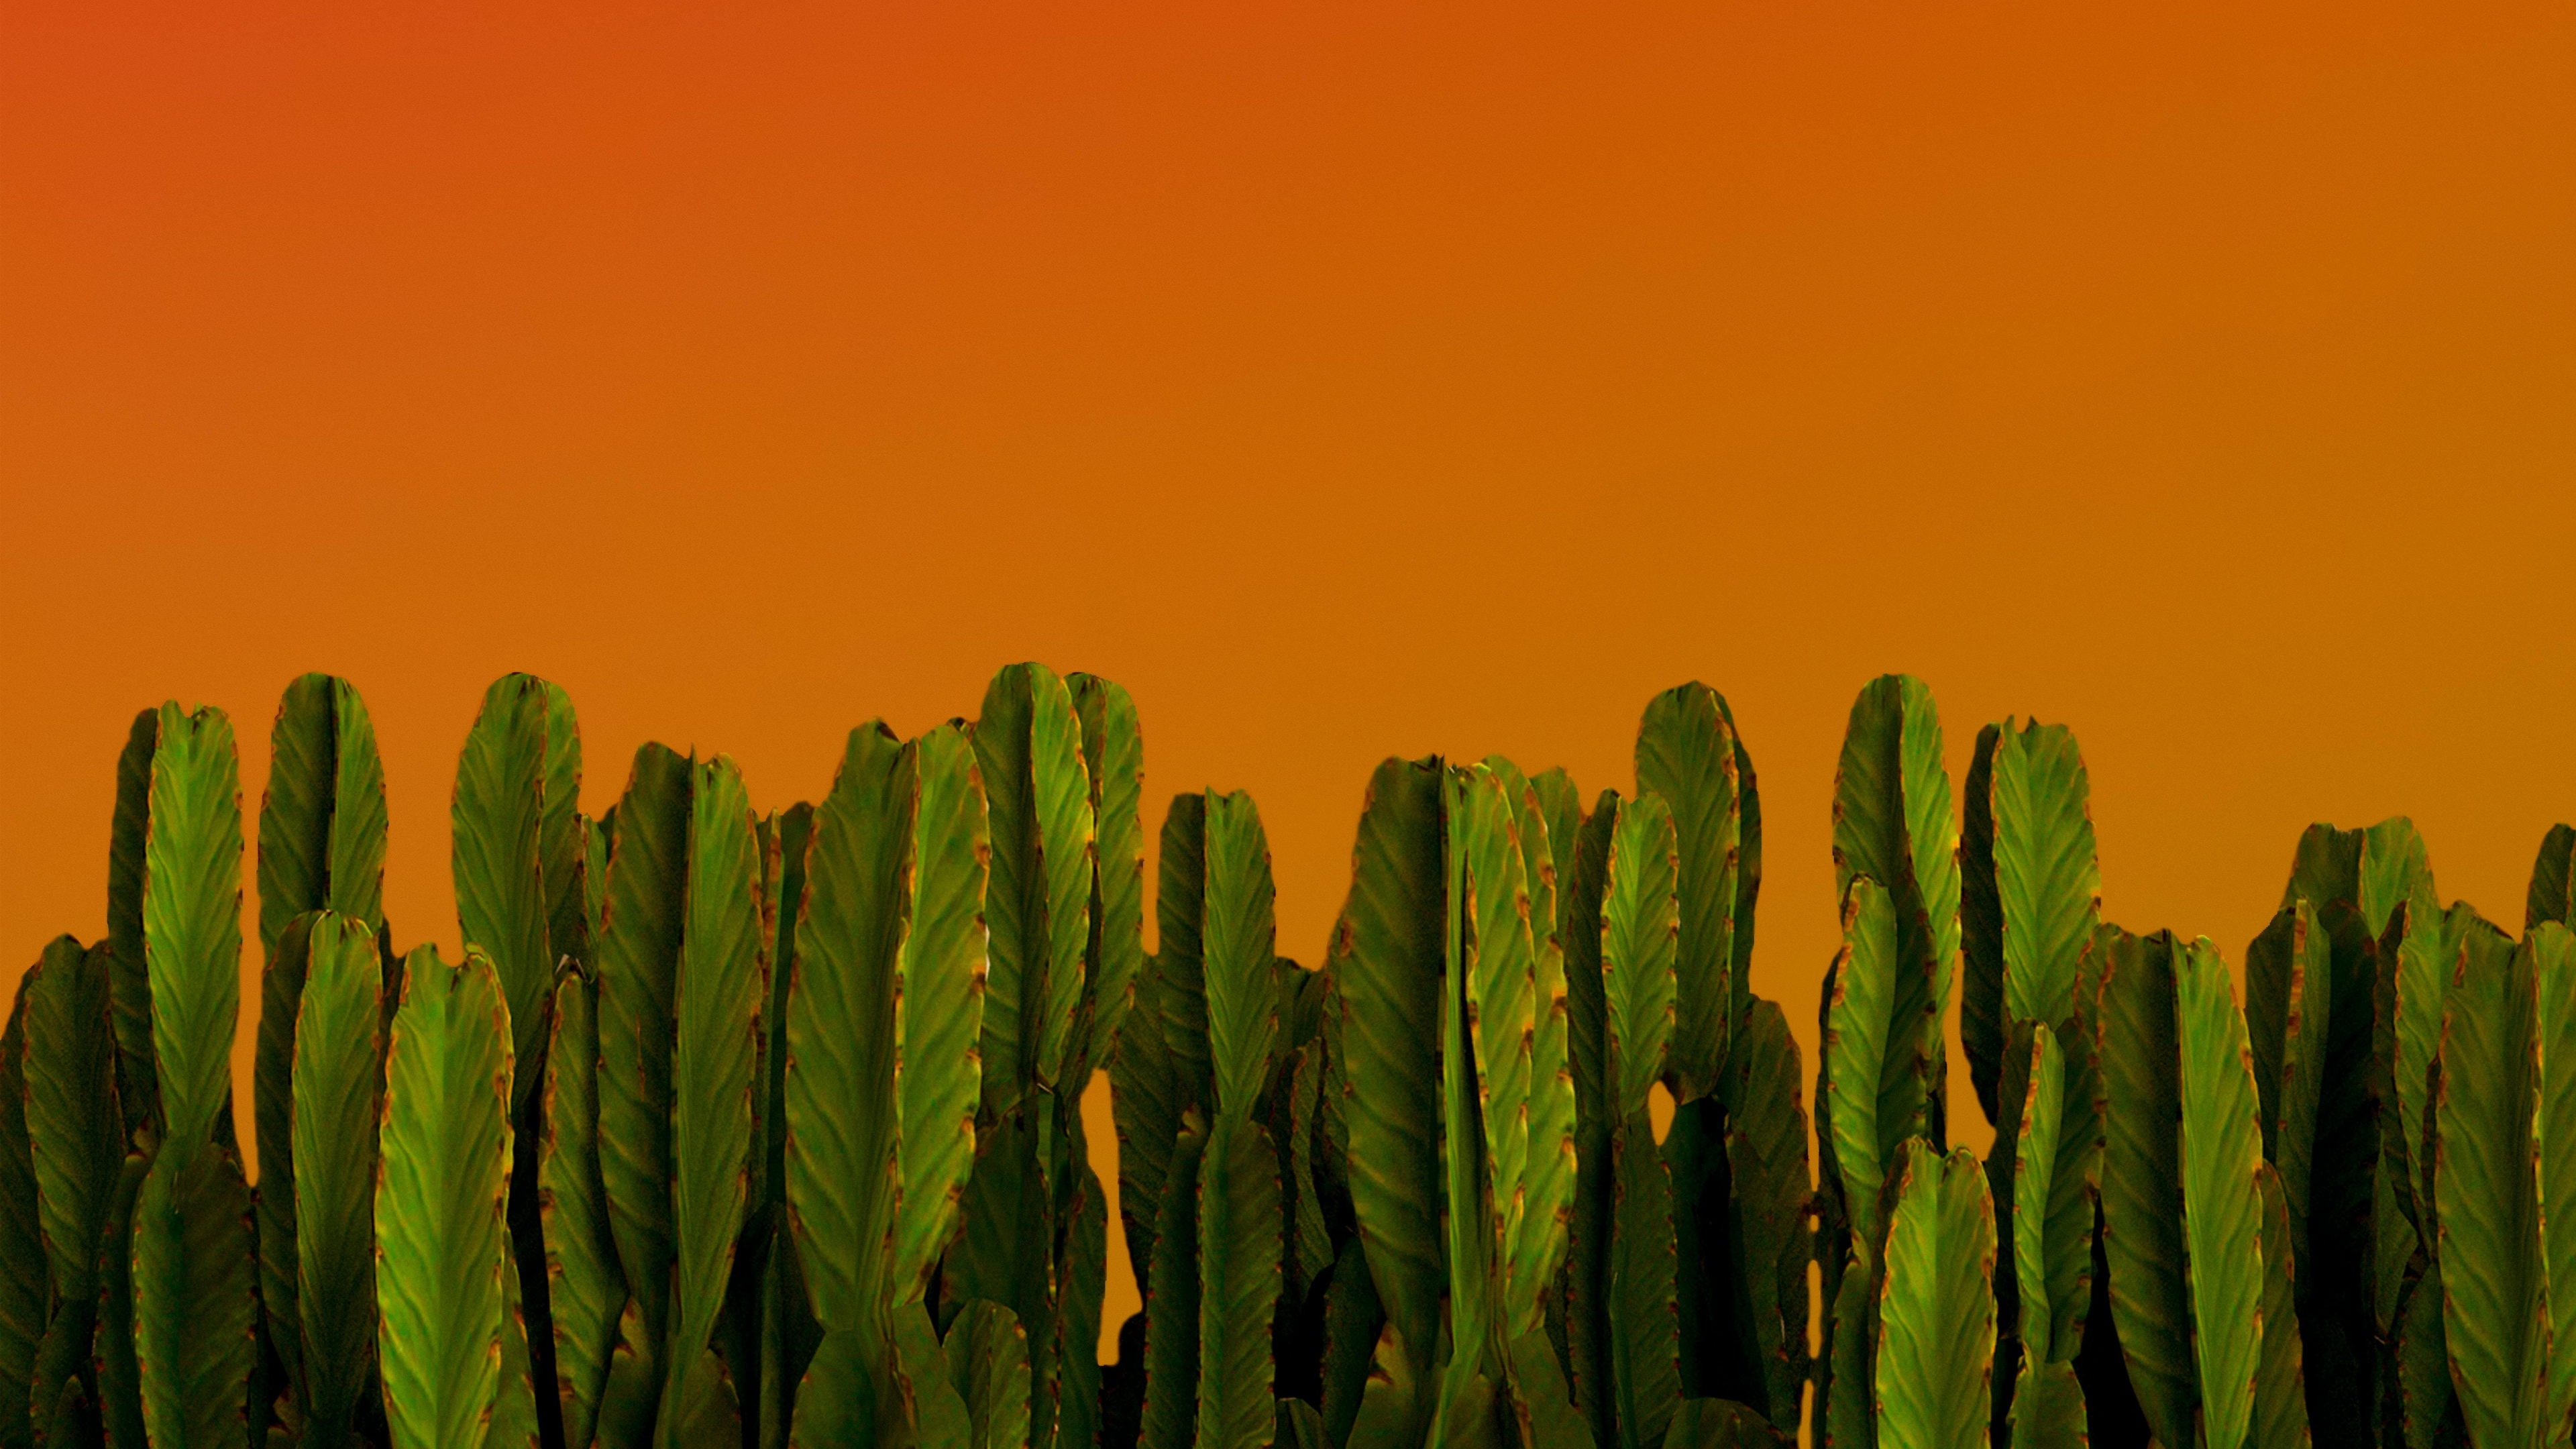 Download wallpaper 3840x2160 cactus, green plants, desert plants 4k  wallpaper, uhd wallpaper, 16:9 widescreen 3840x2160 hd background, 25747